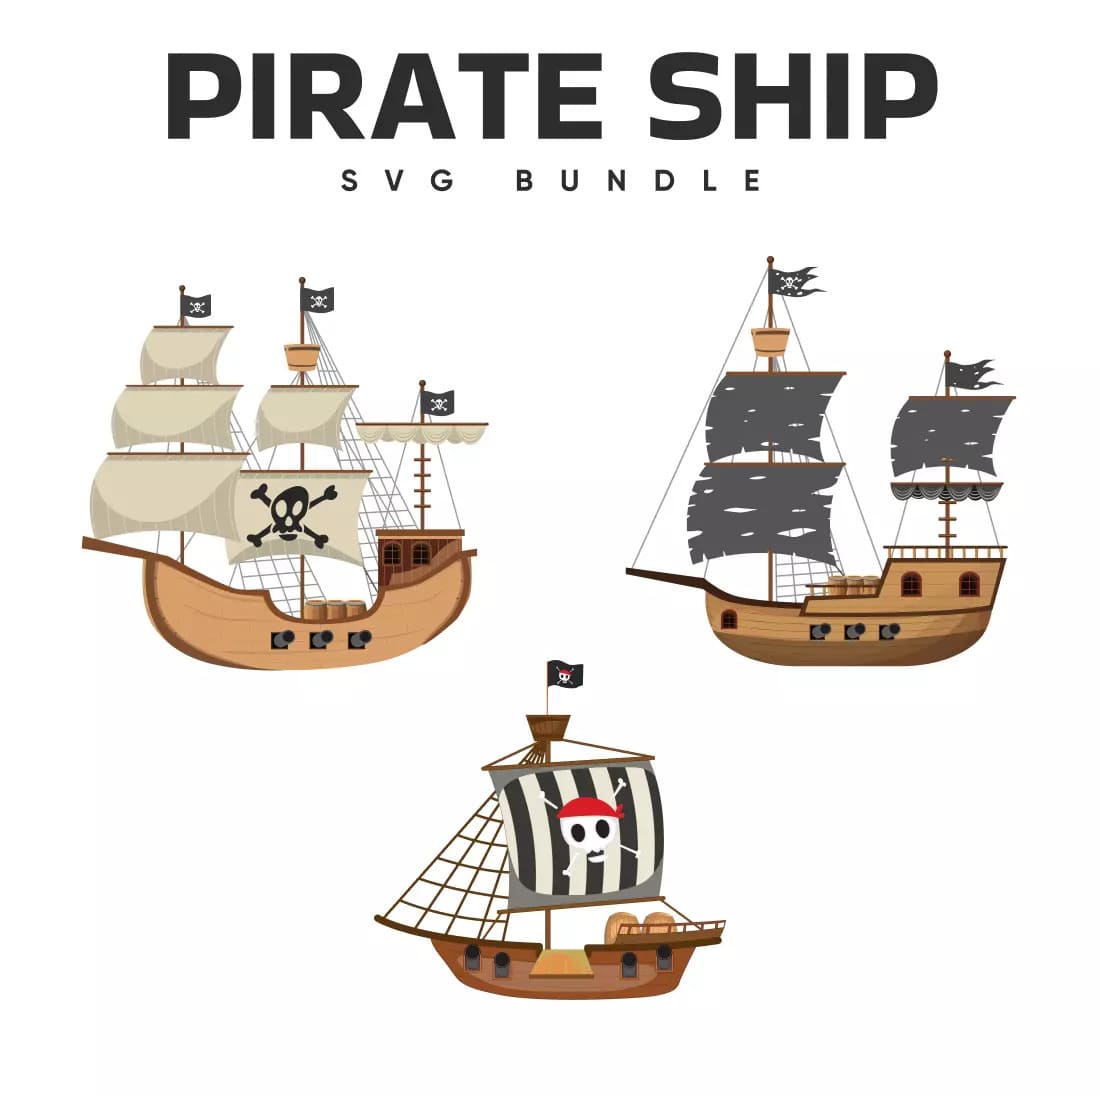 Pirate Ship SVG Bundle Preview image.